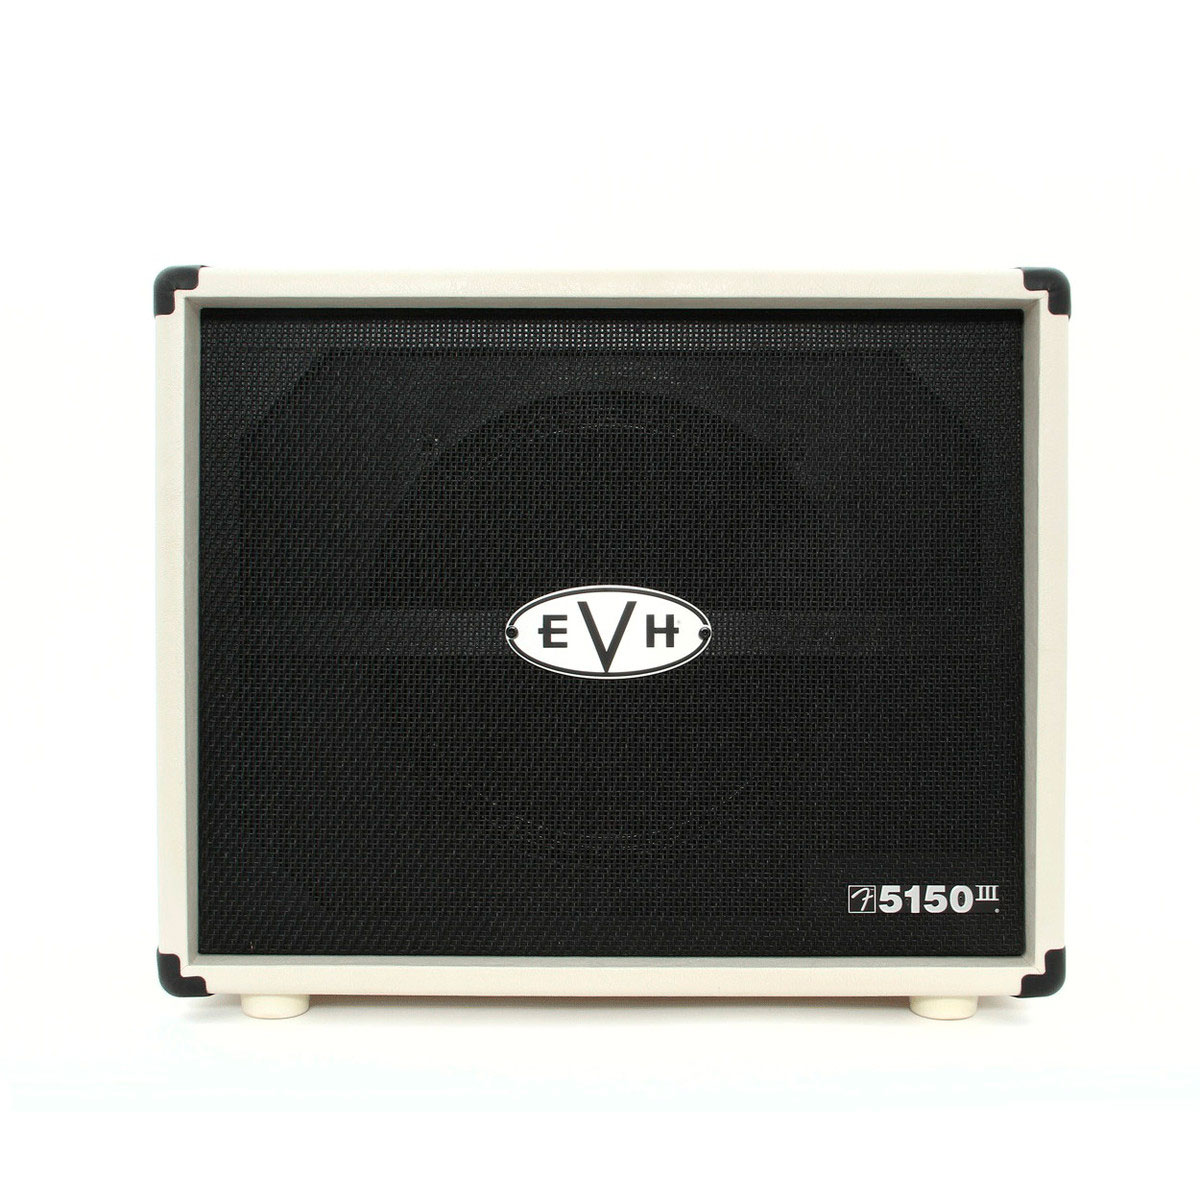 EVH 5150 III 1x12 Straight Cabinet IVR - Bafle guitarra